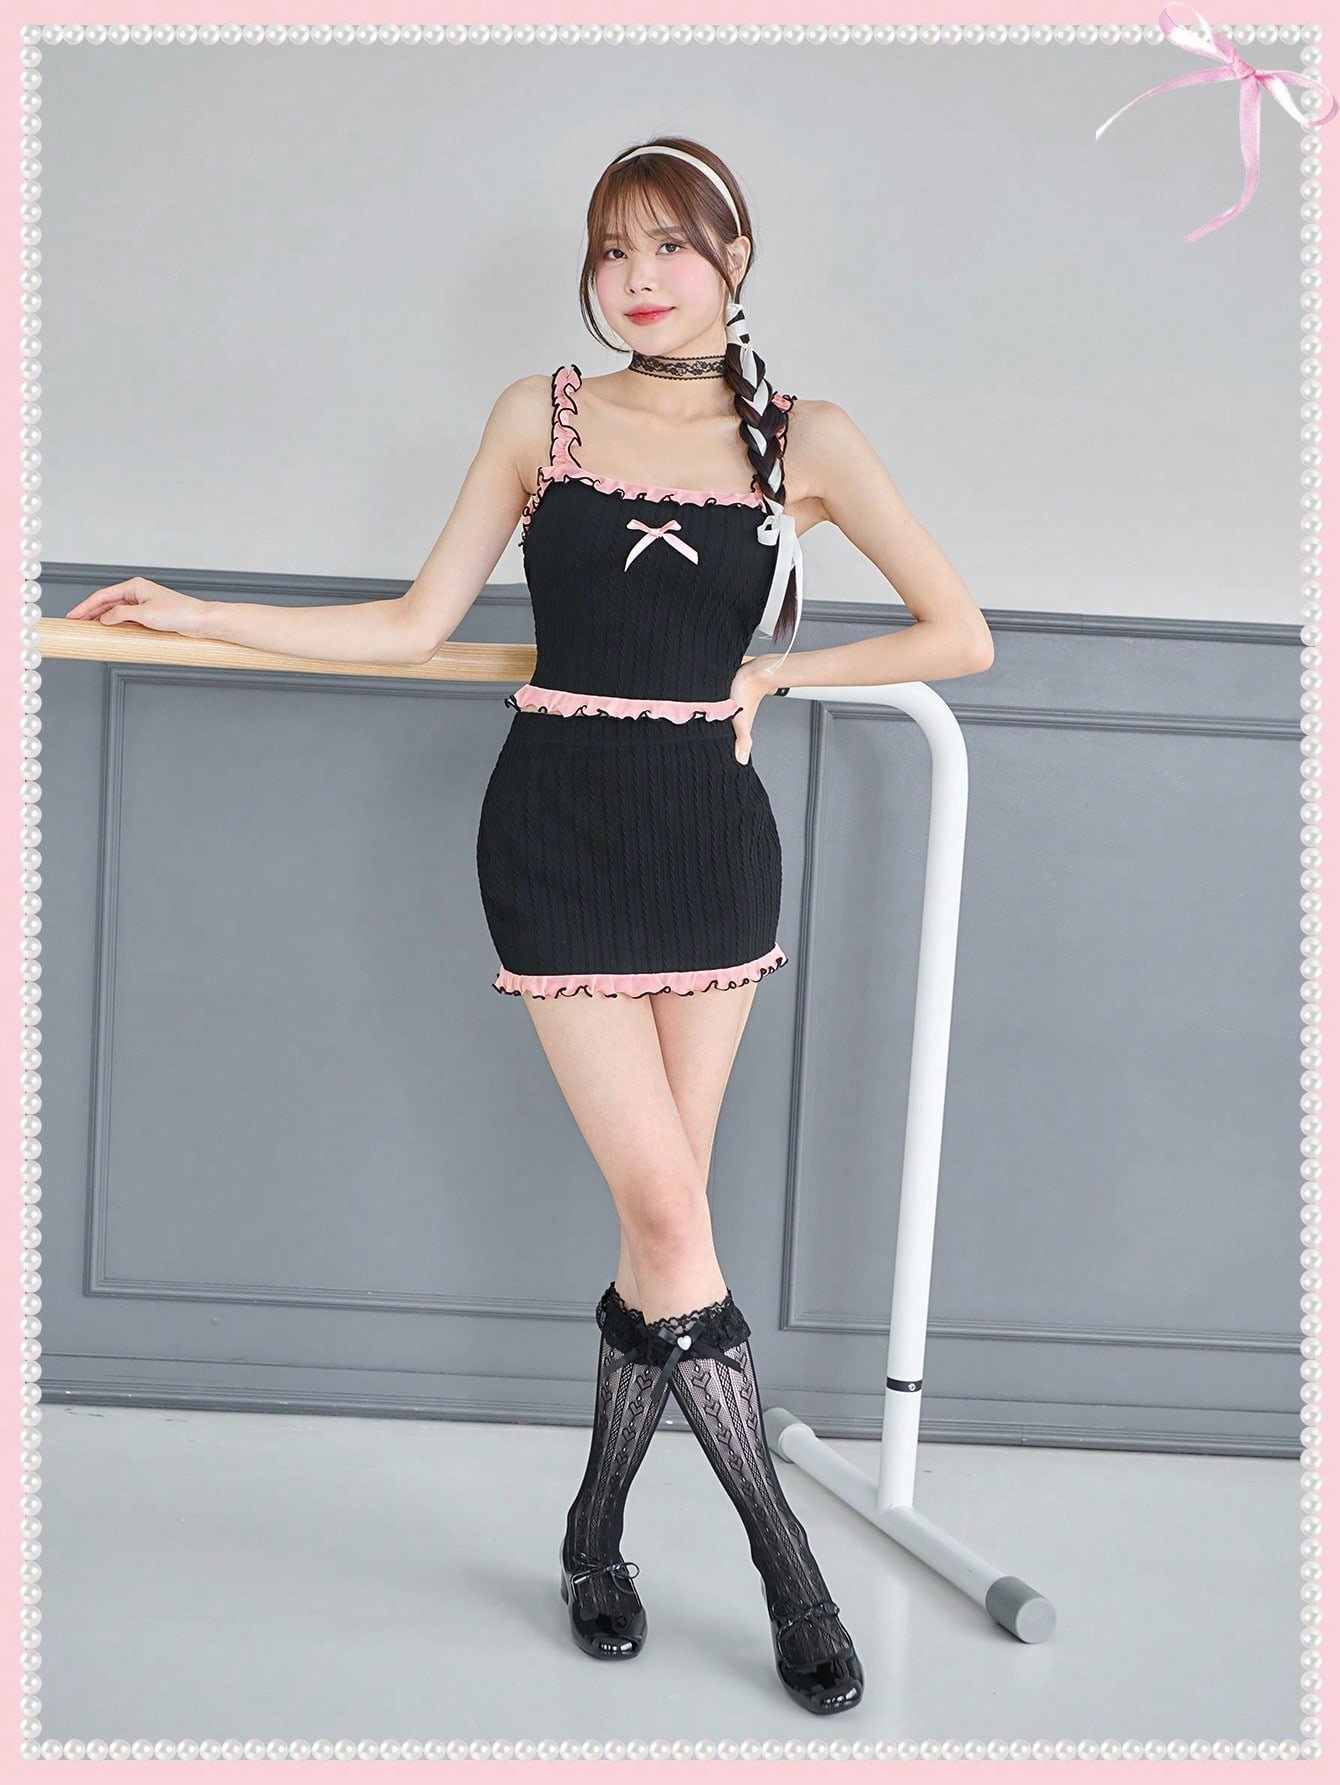 SHEIN Neu バレエコアリボンかわいいフリルトップコントラストレース黒ツーピース衣装バレンタイン服ピンクスカート